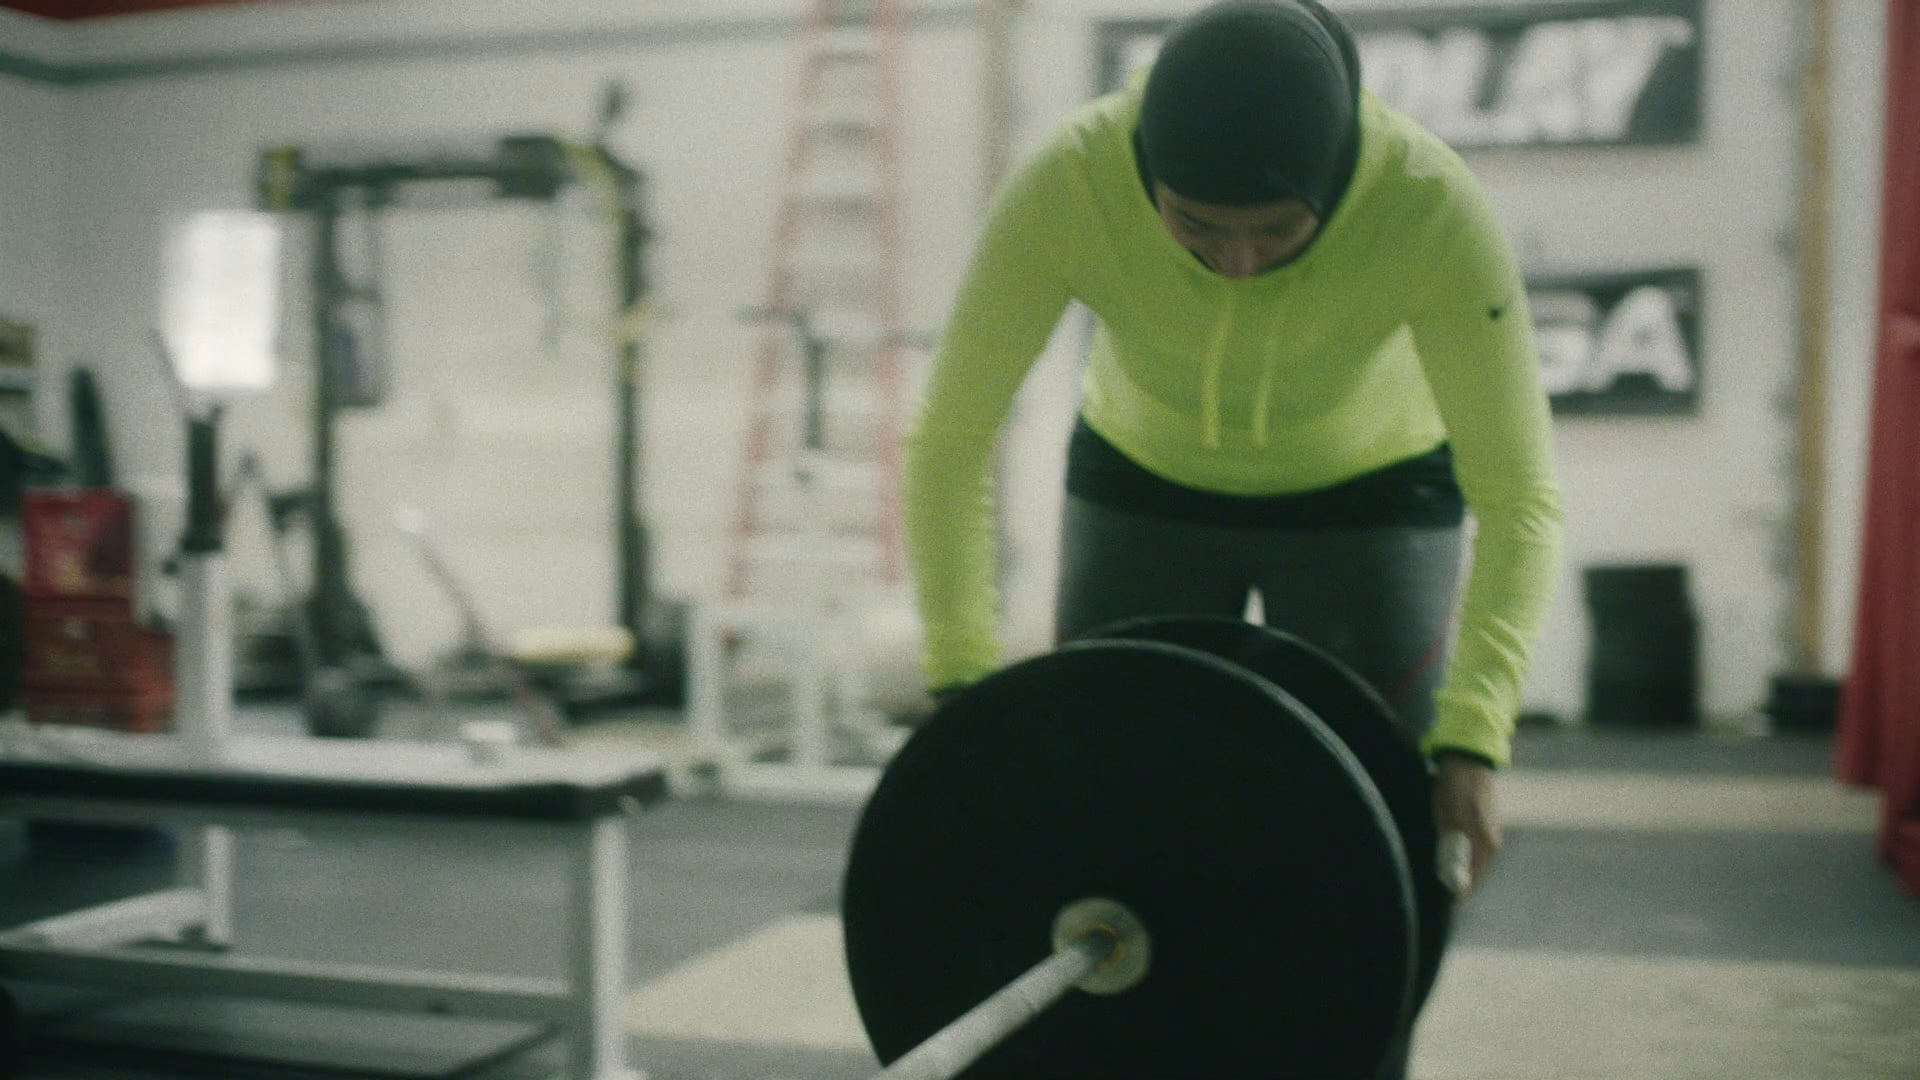 Video Emirati Weightlifter Amna Al Haddads Inspirational Story on Vimeo